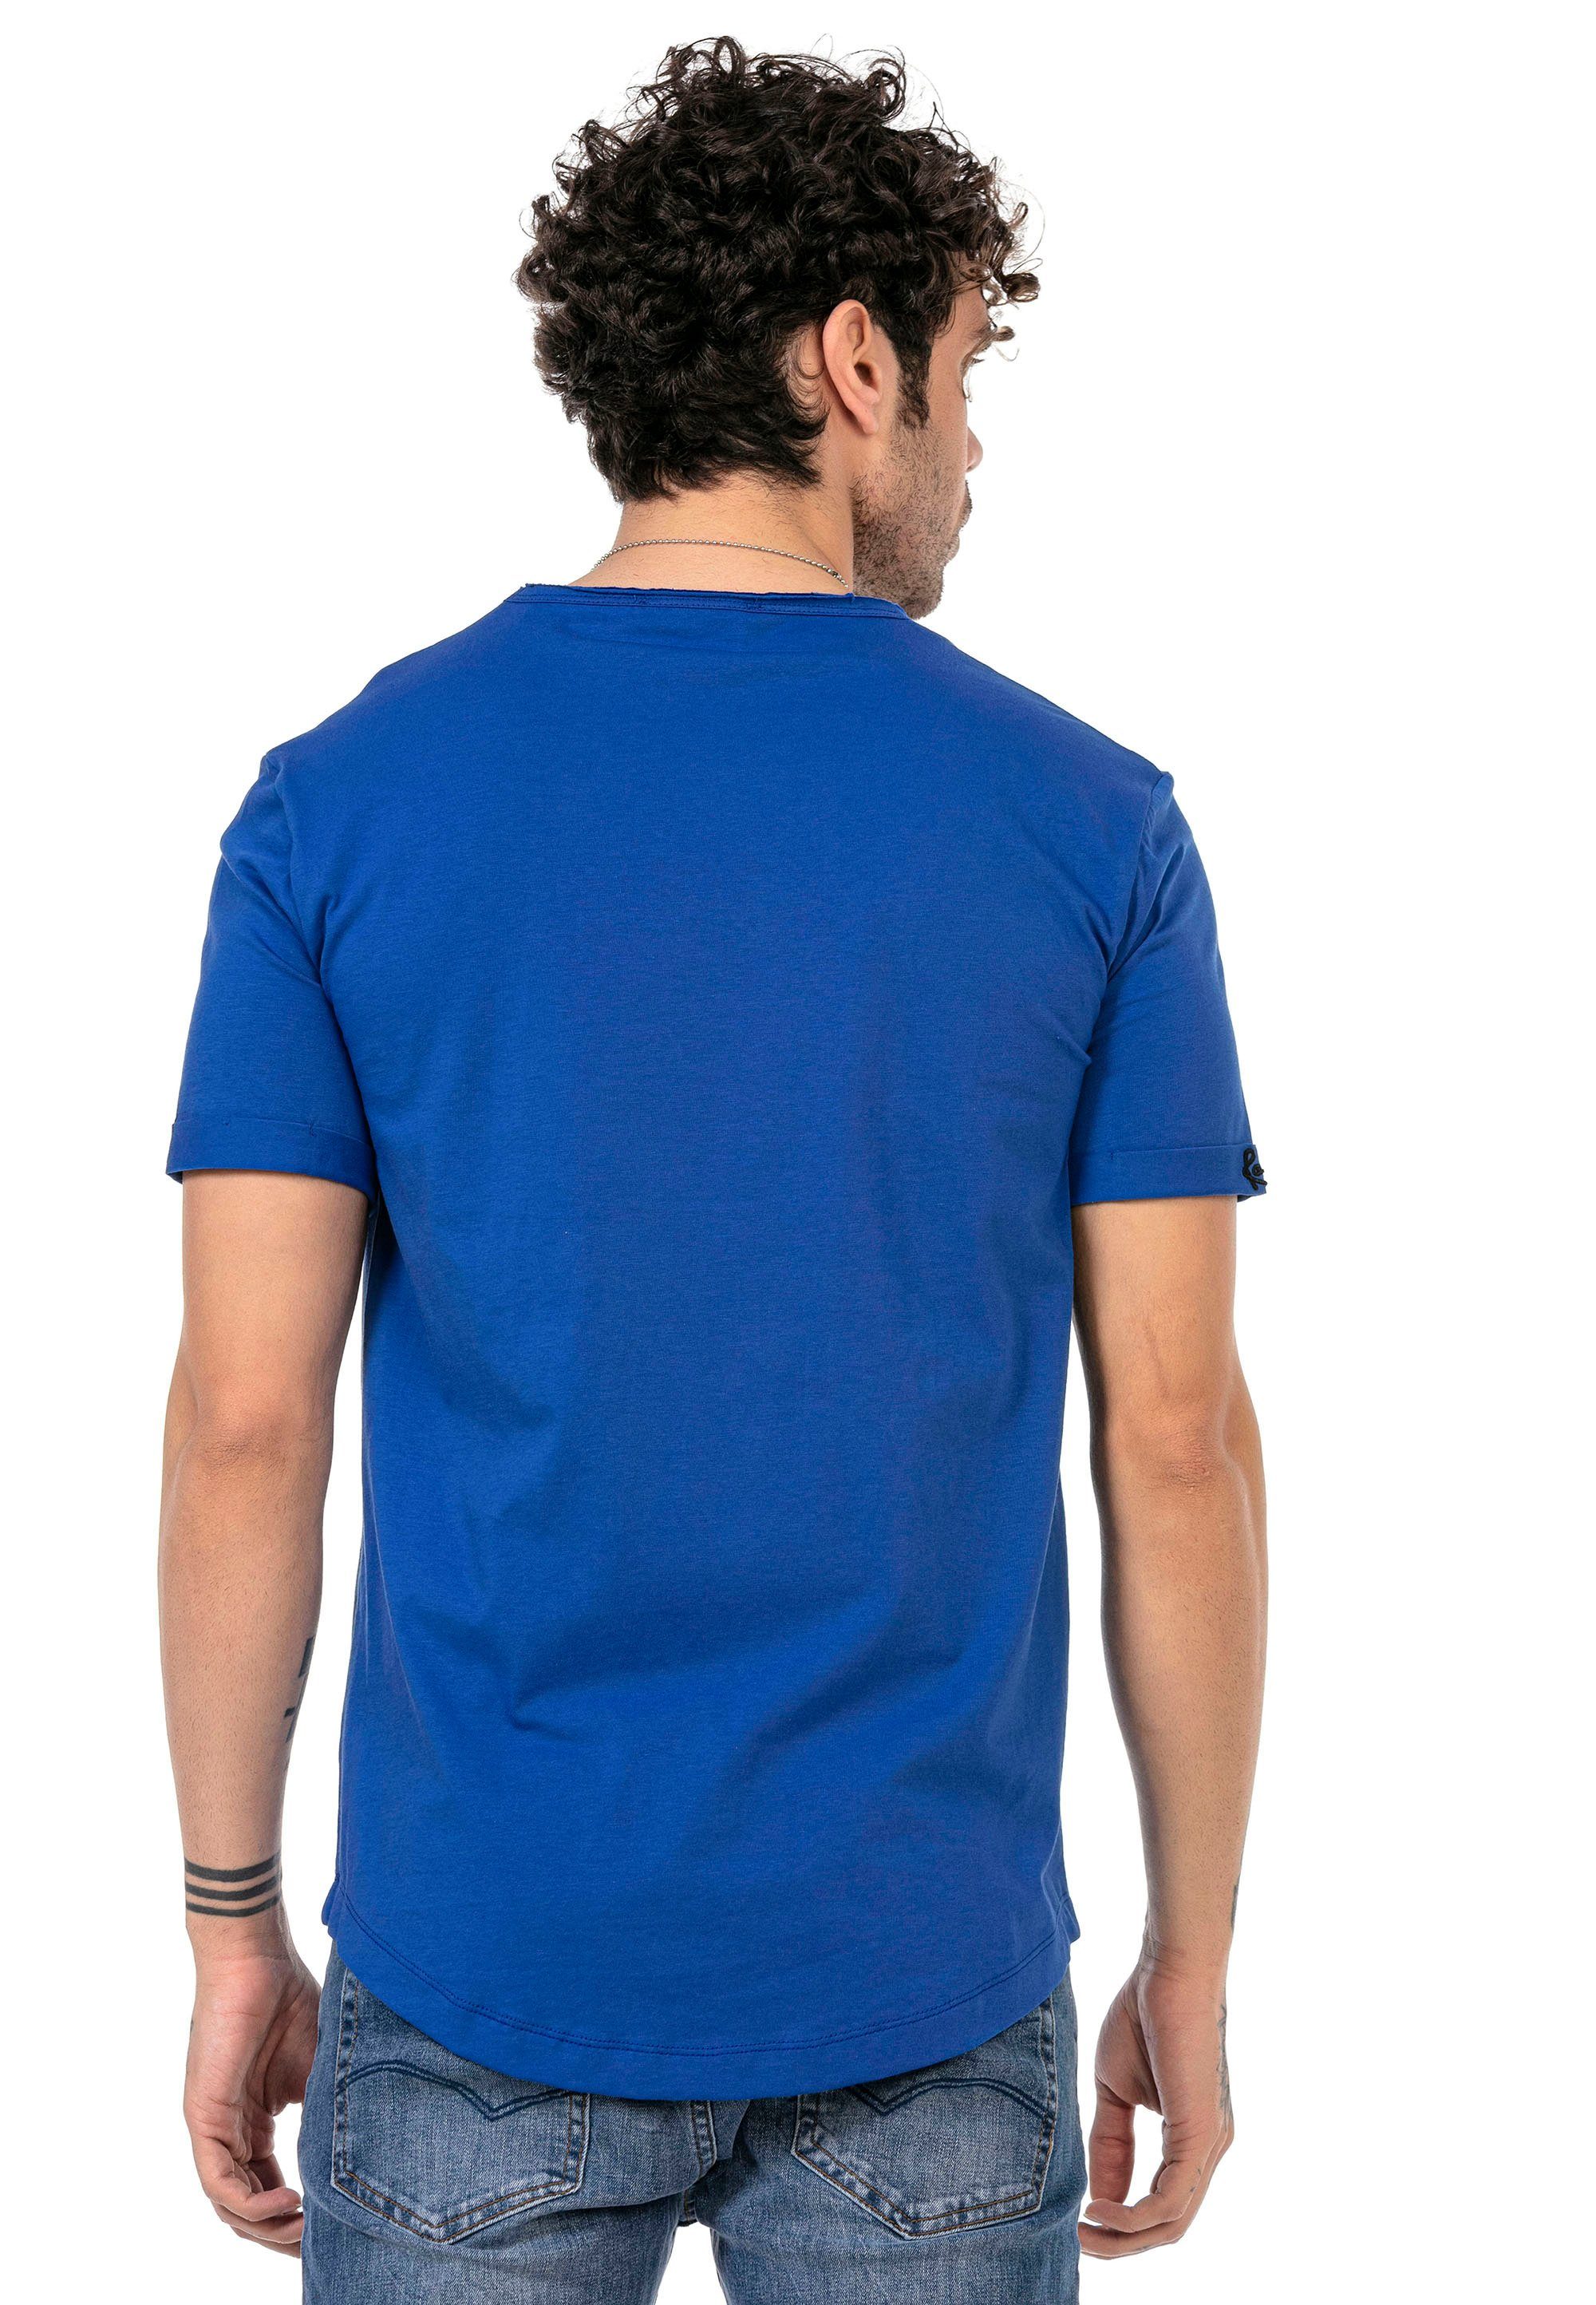 blau Cruces mit T-Shirt Tragekomfort Las RedBridge tollem